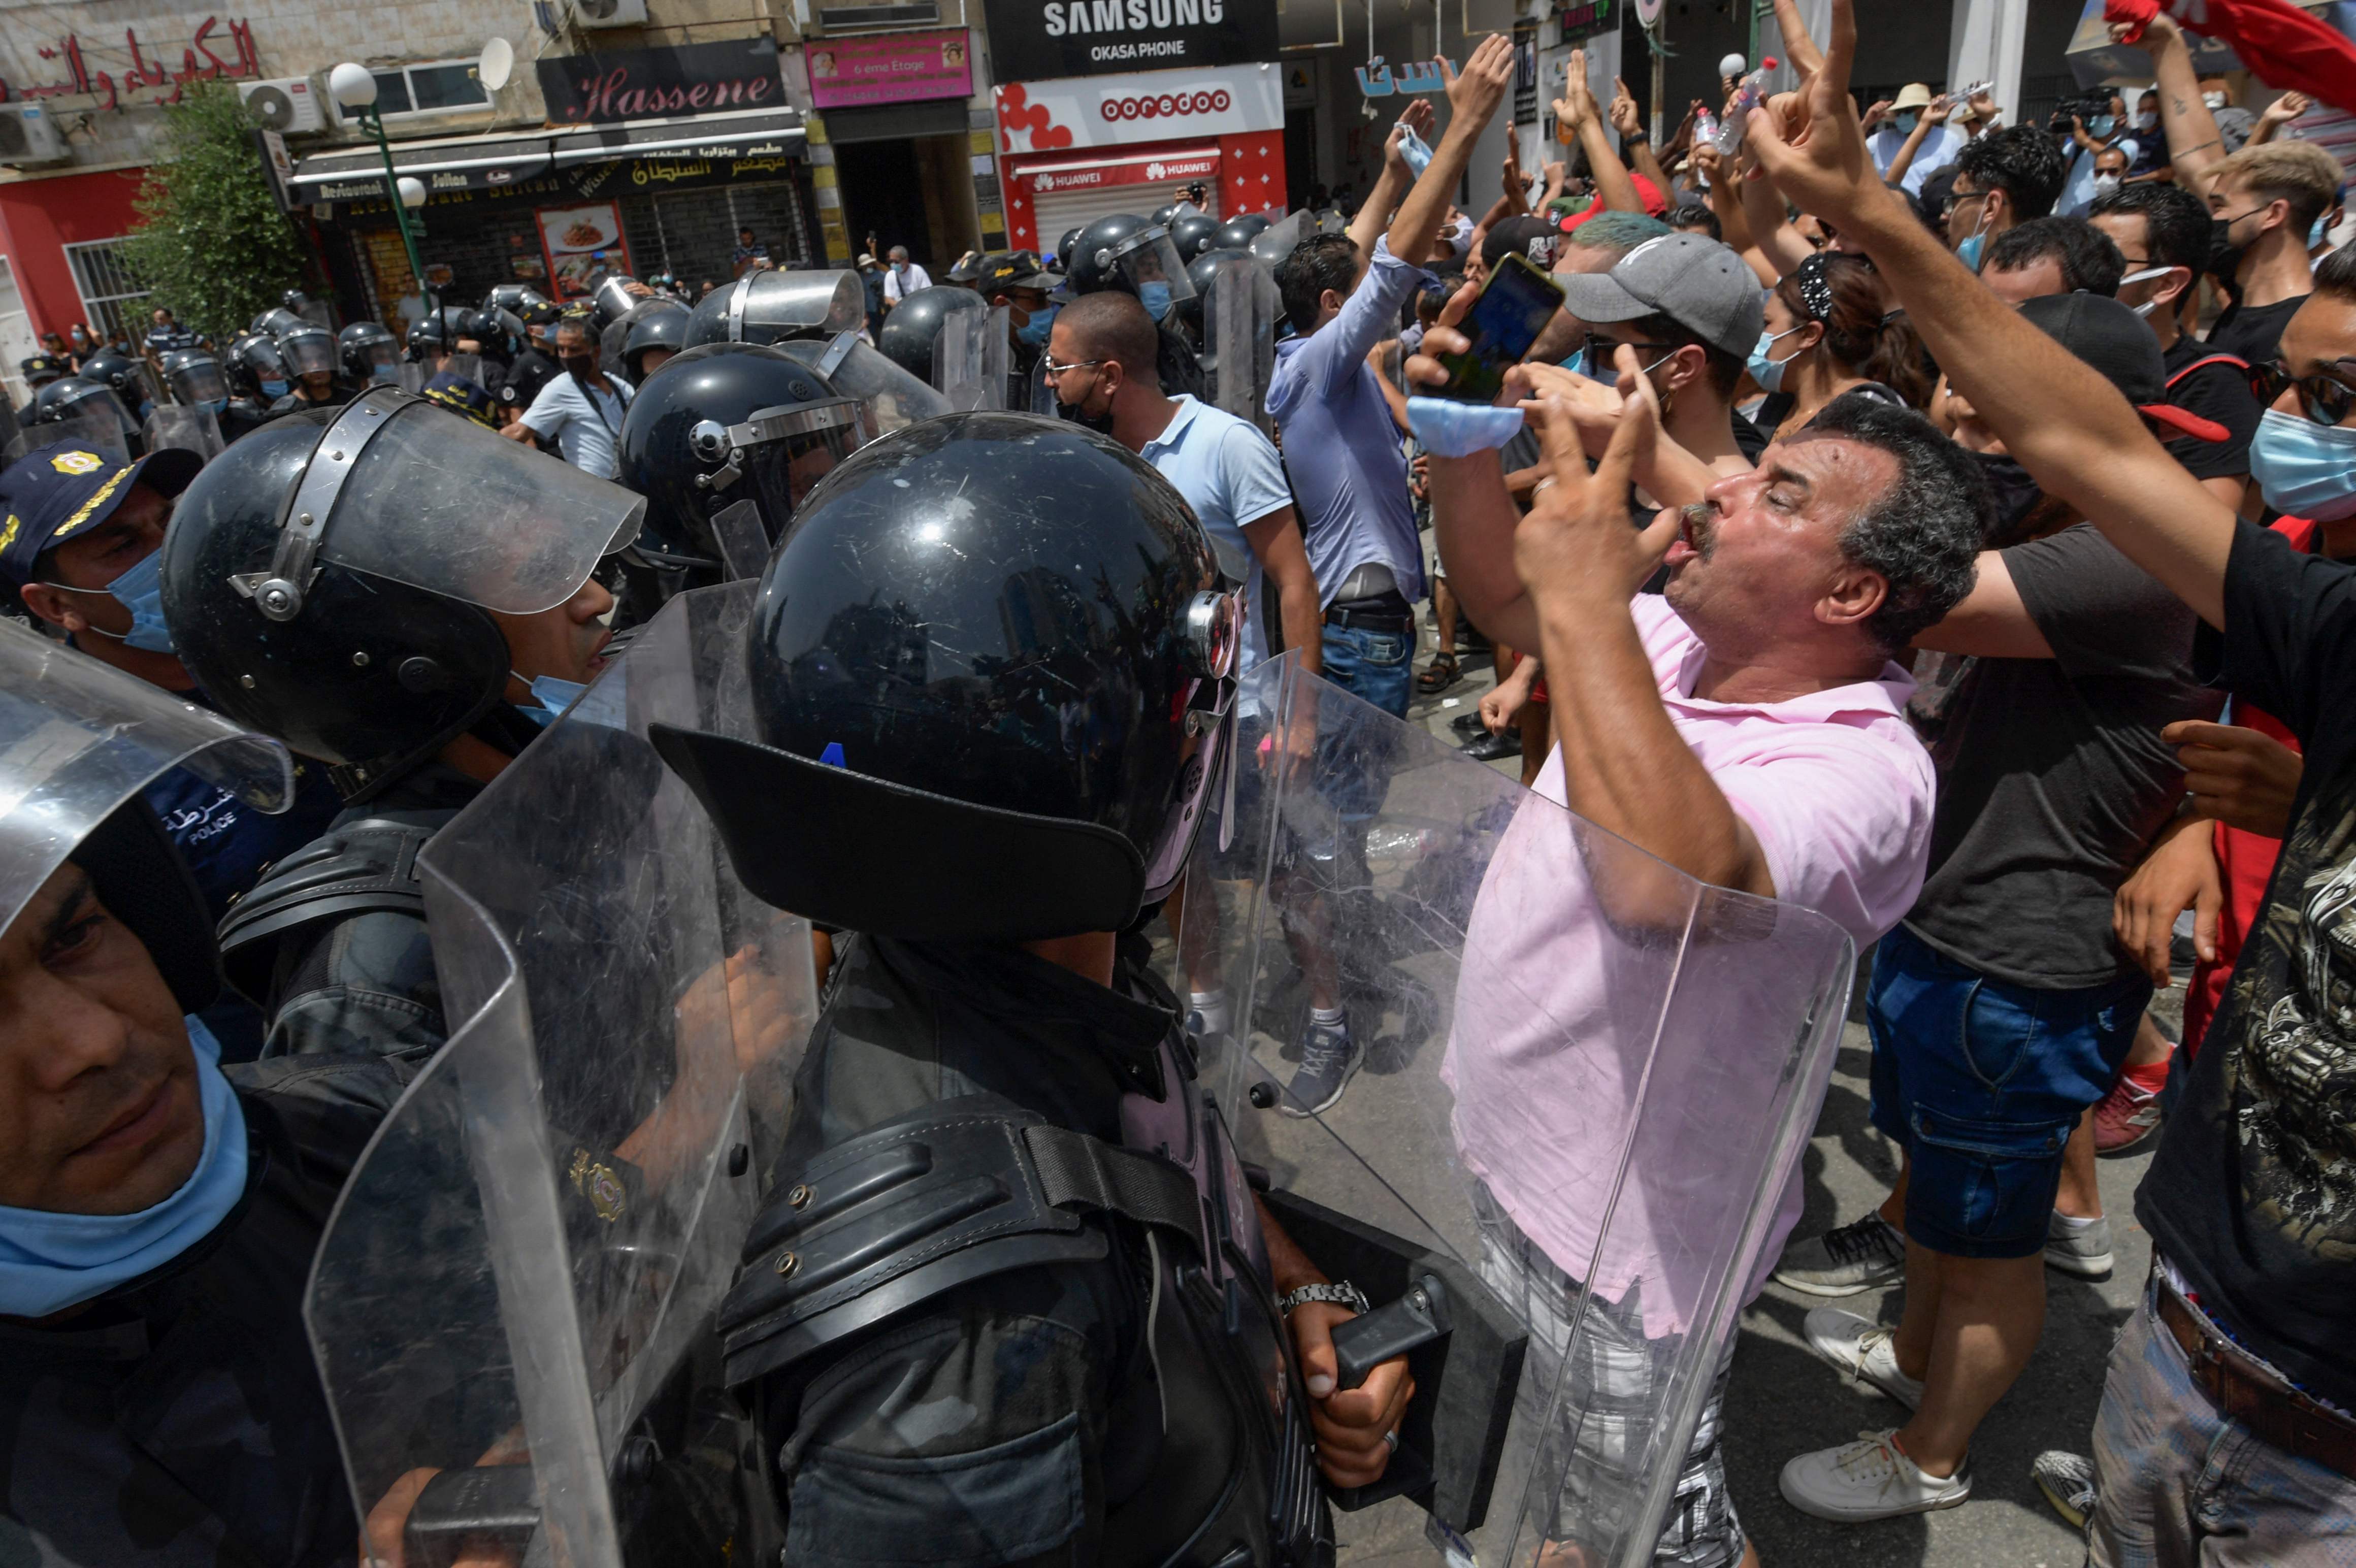 riot civil unrest arab spring tips